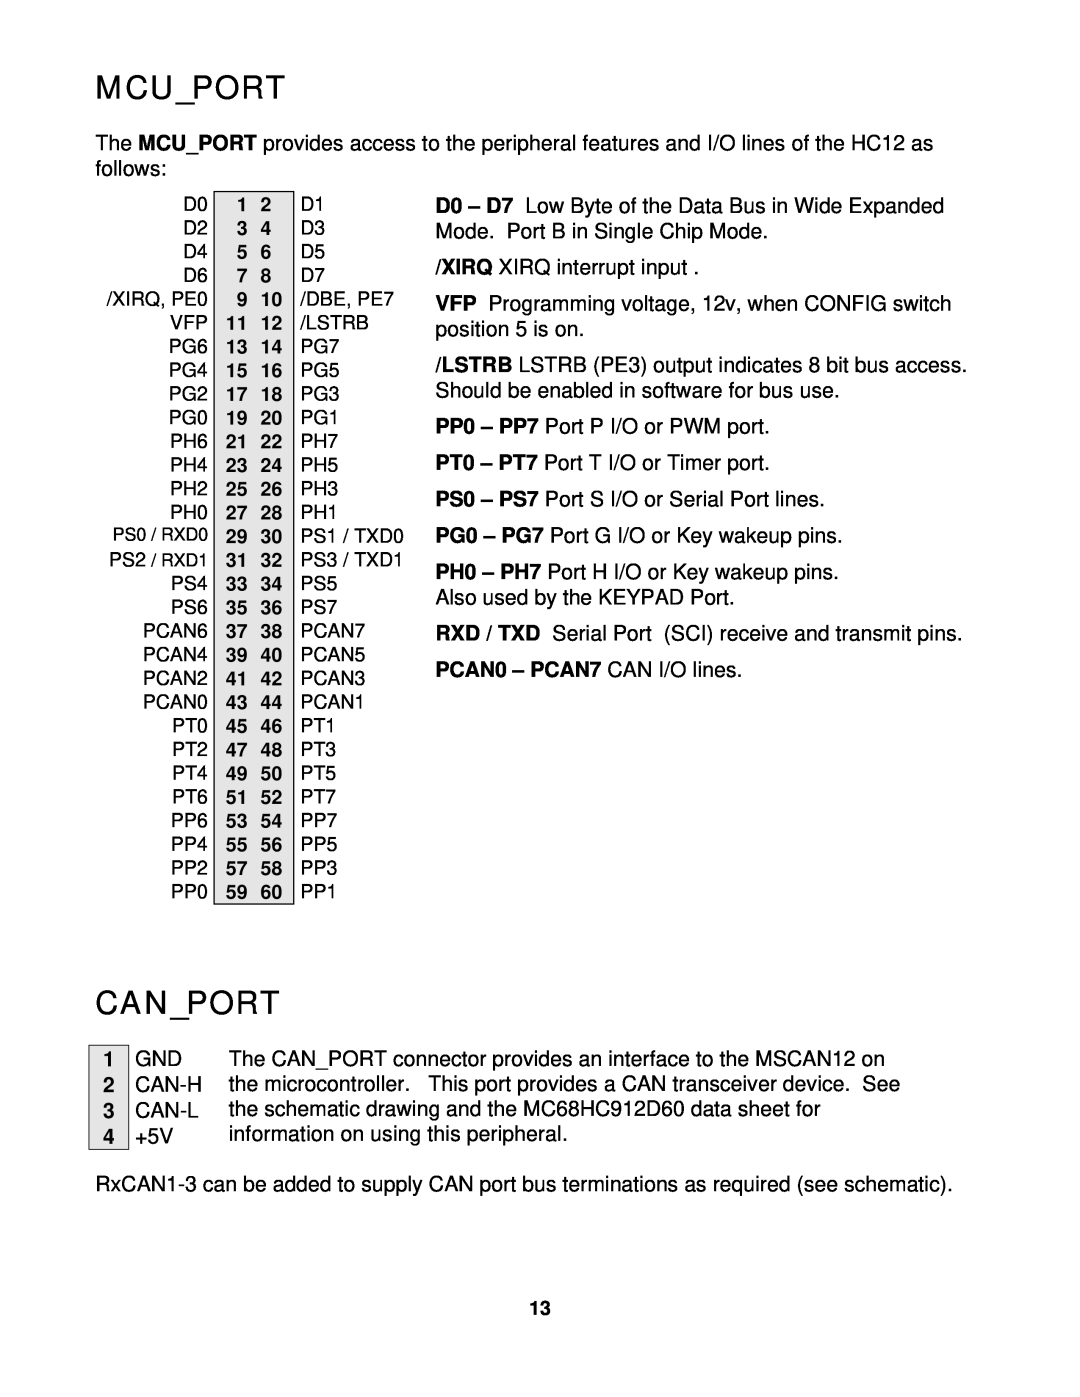 Motorola CME-12D60 manual Mcuport, Canport, PCAN0 - PCAN7 CAN I/O lines 